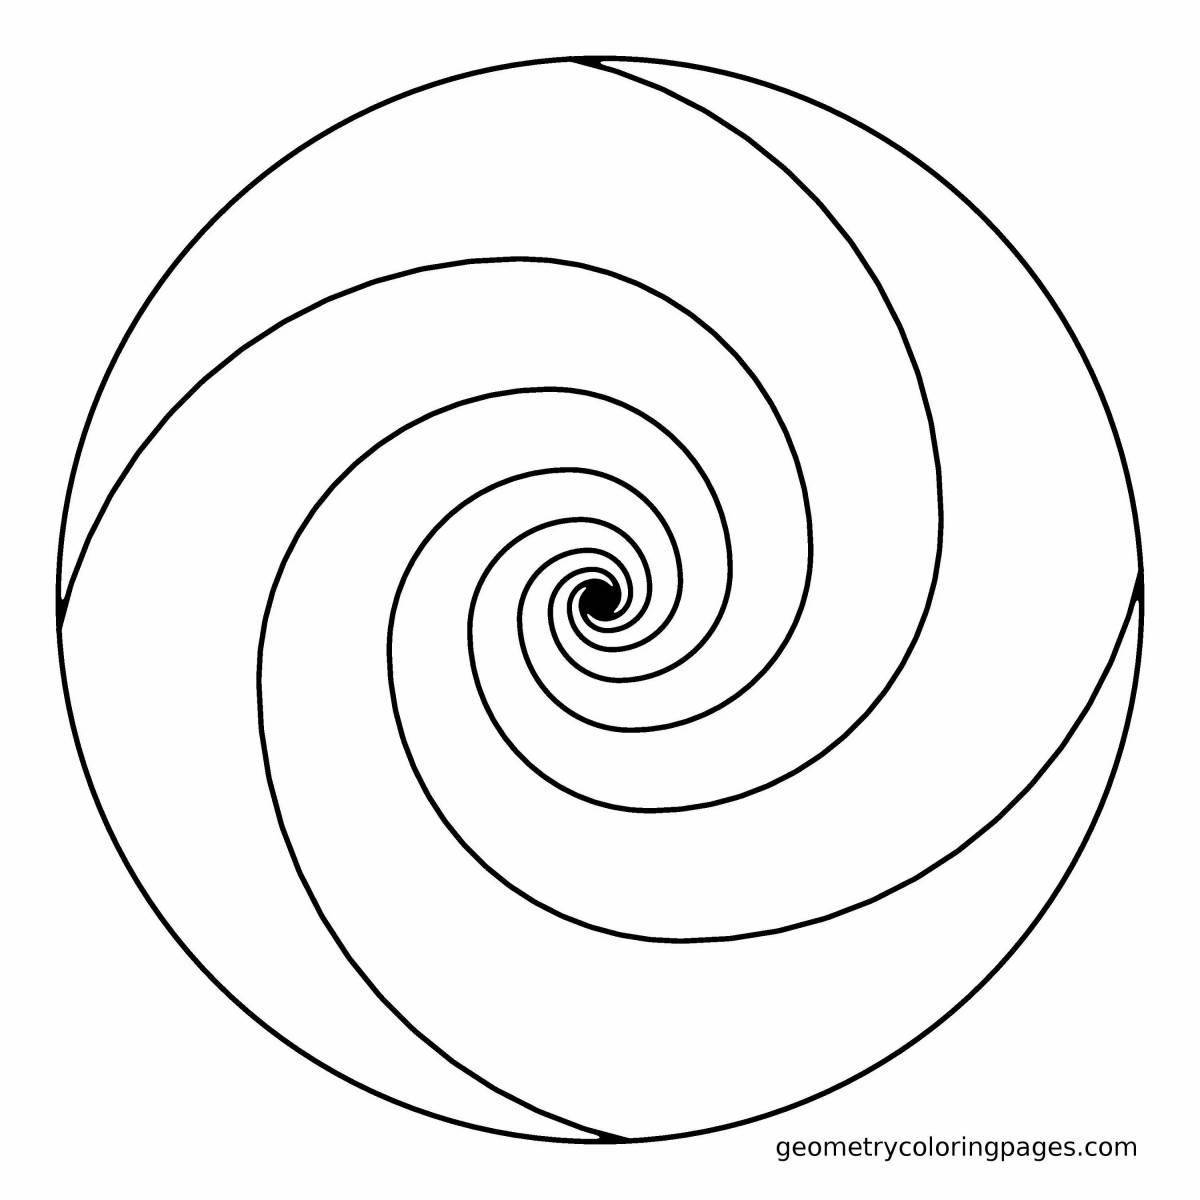 Fascinating spiral coloring